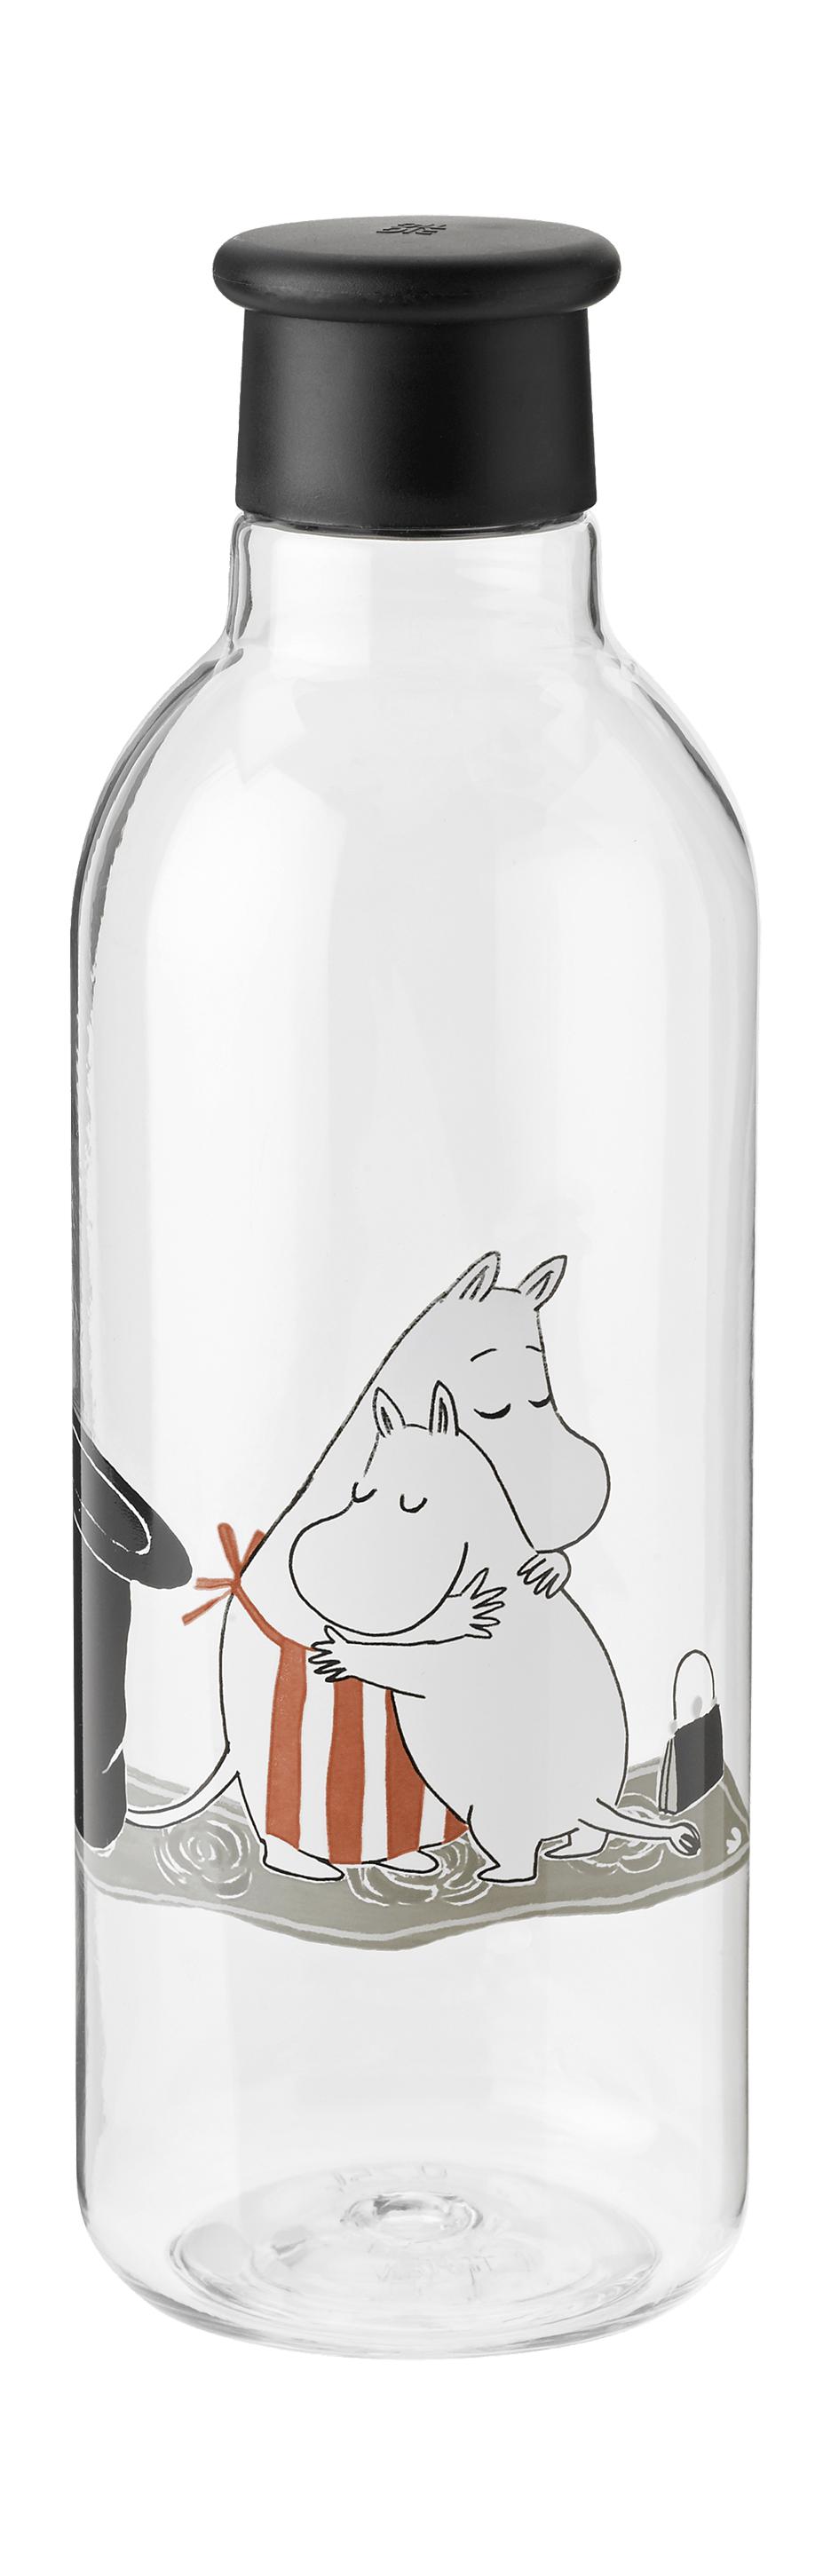 Rig Tig Rig Tig X Moomin Vandflaske I 0,75 L, Moomin Black